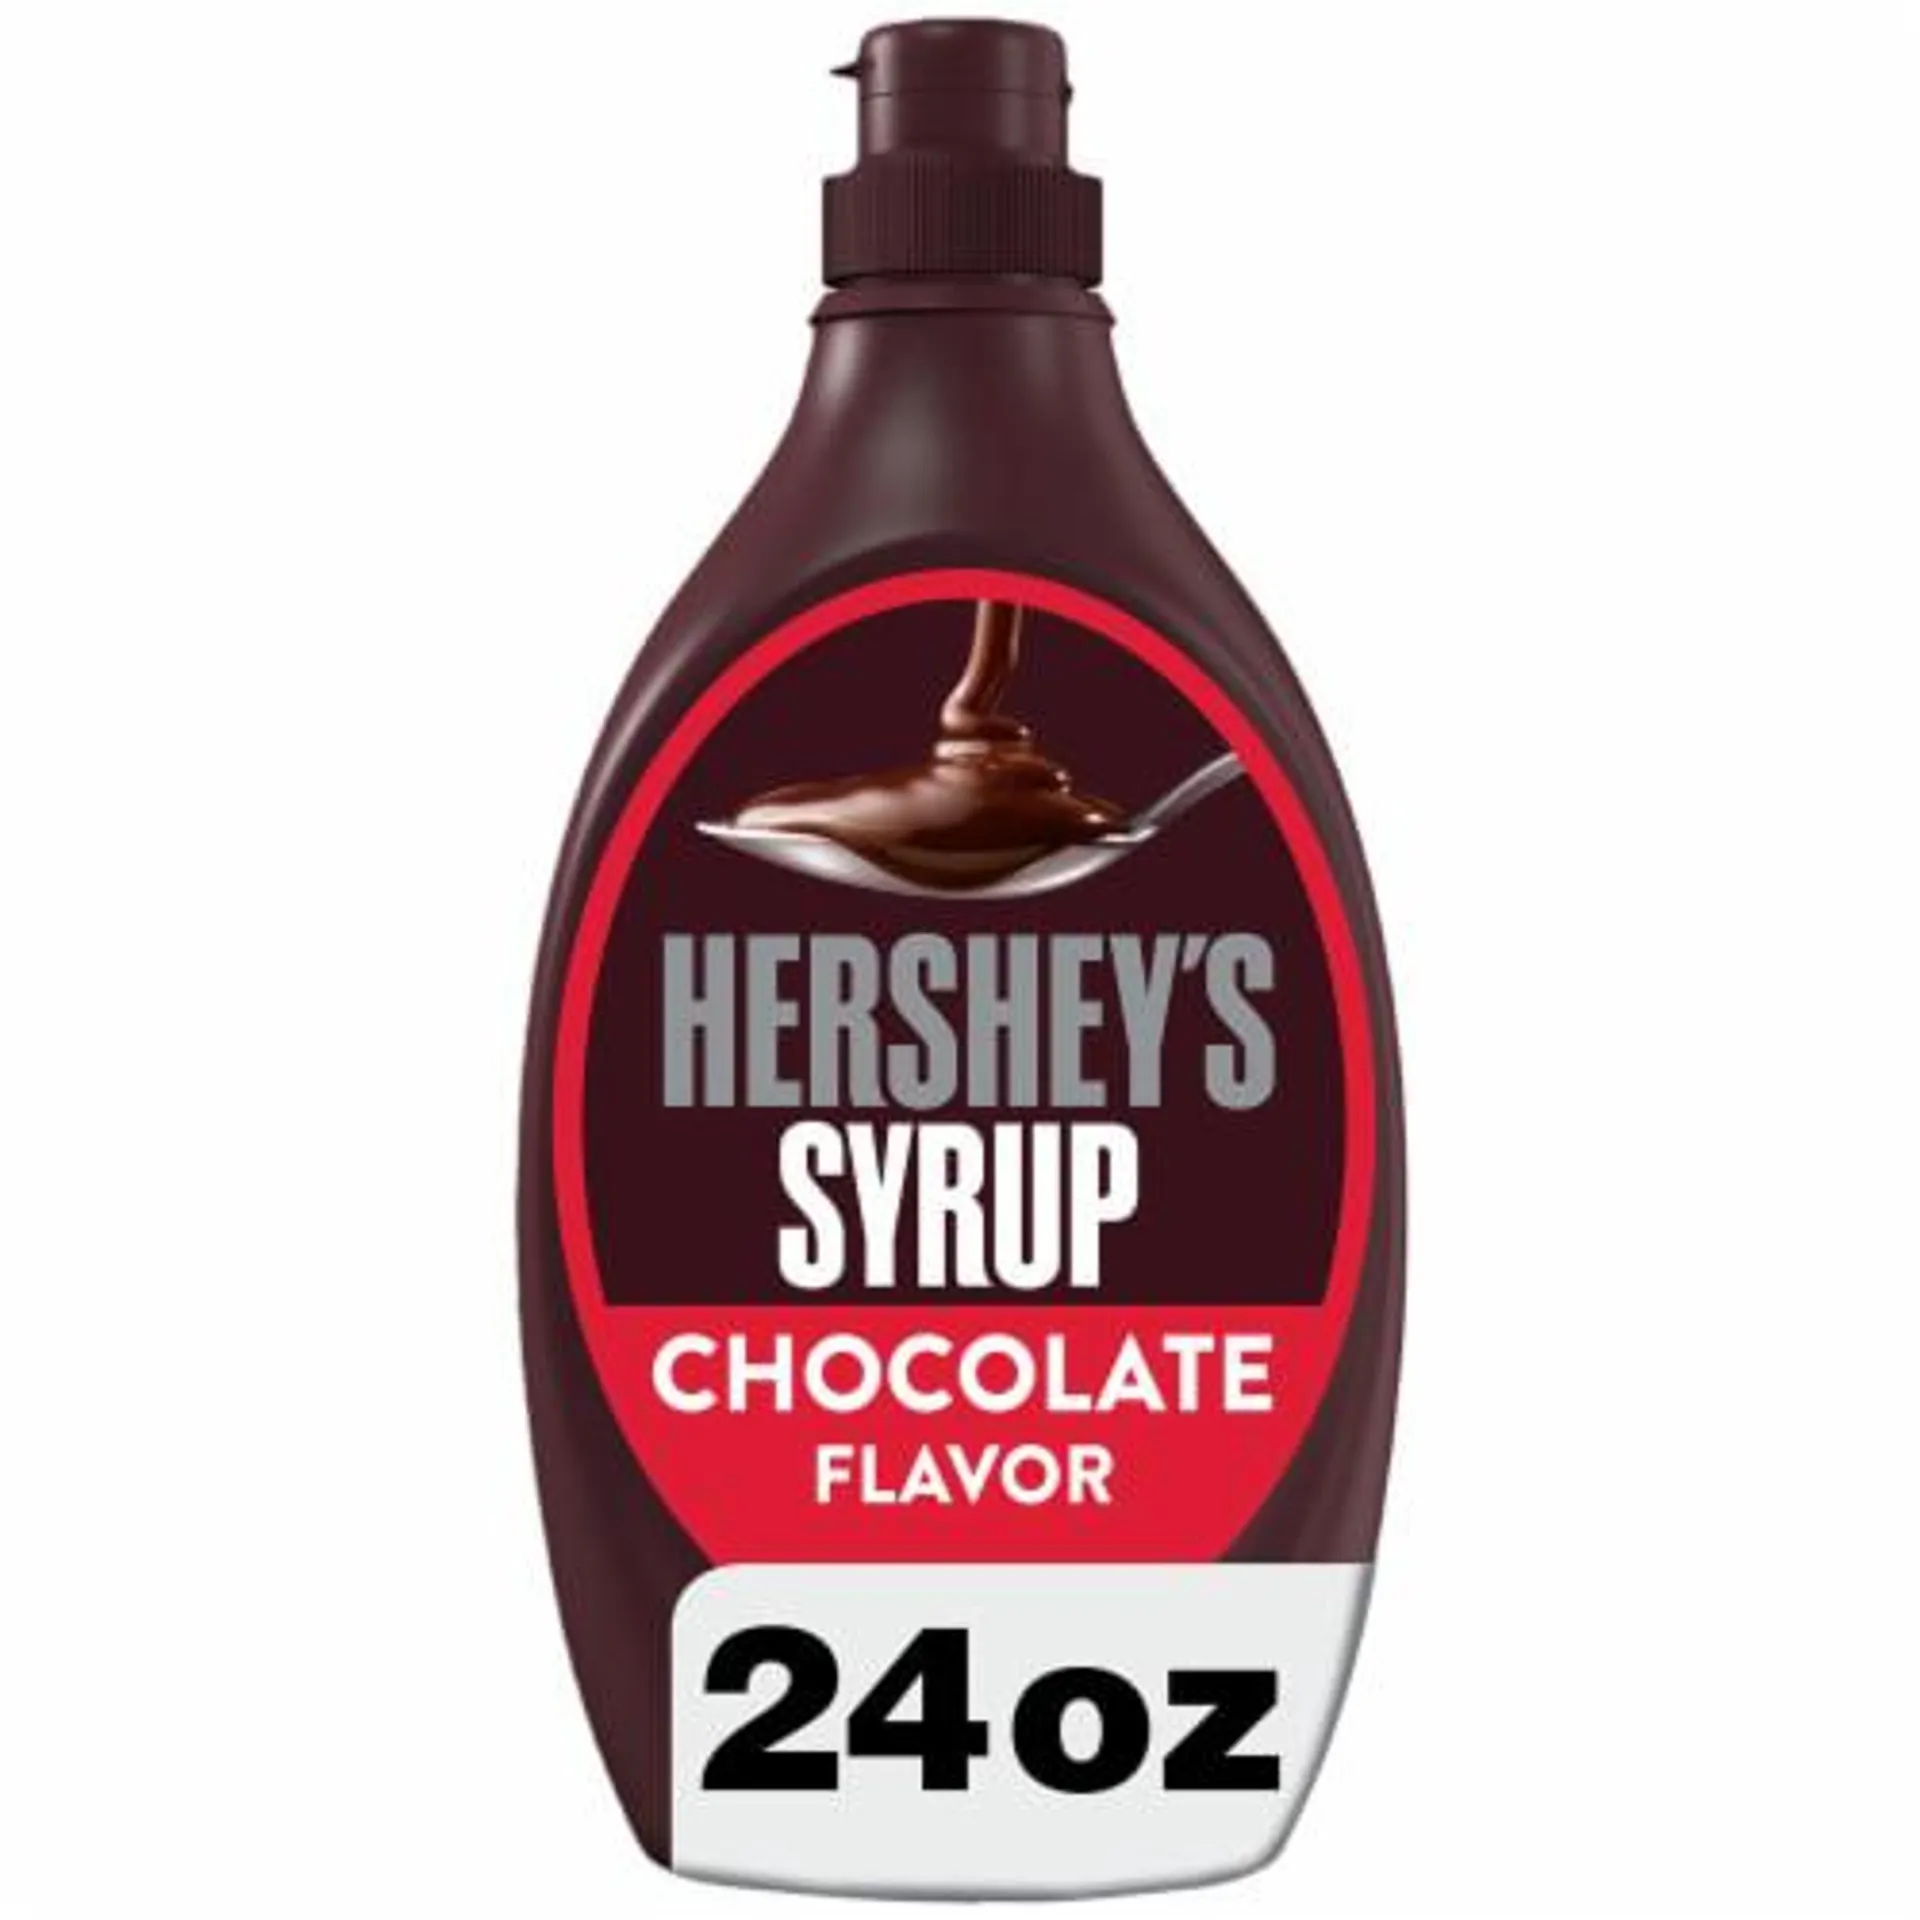 HERSHEY'S Chocolate Dessert Gluten Free Fat Free Syrup Bottle